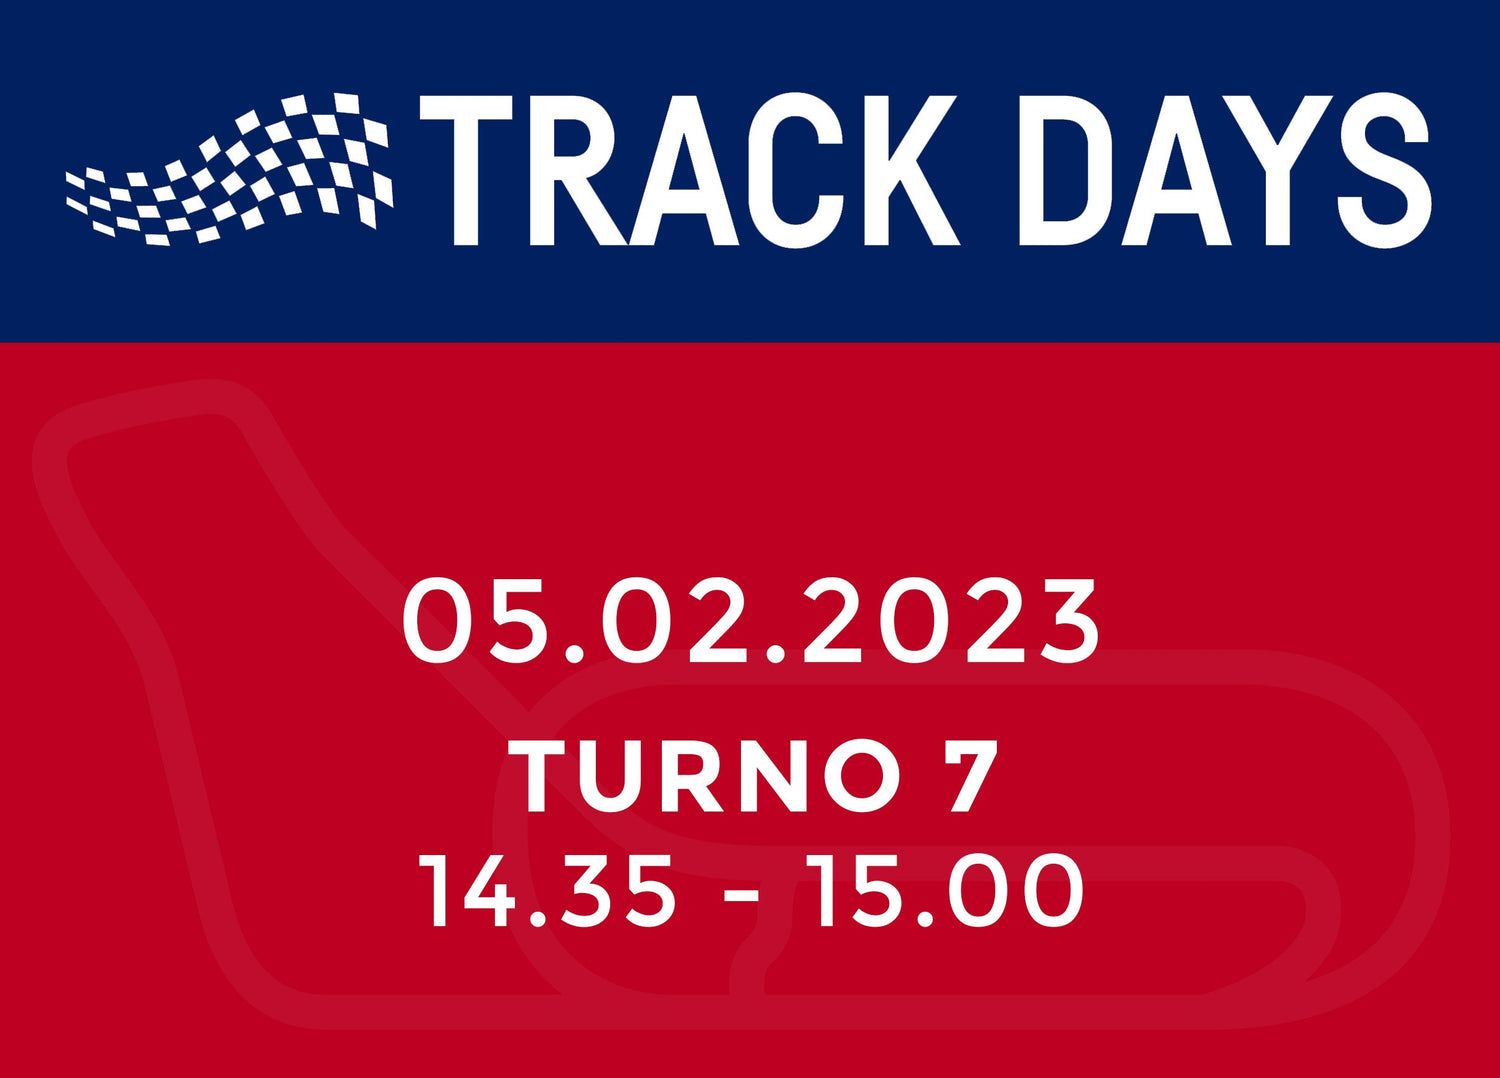 TRACK DAYS 05.02.23 TURNO 7